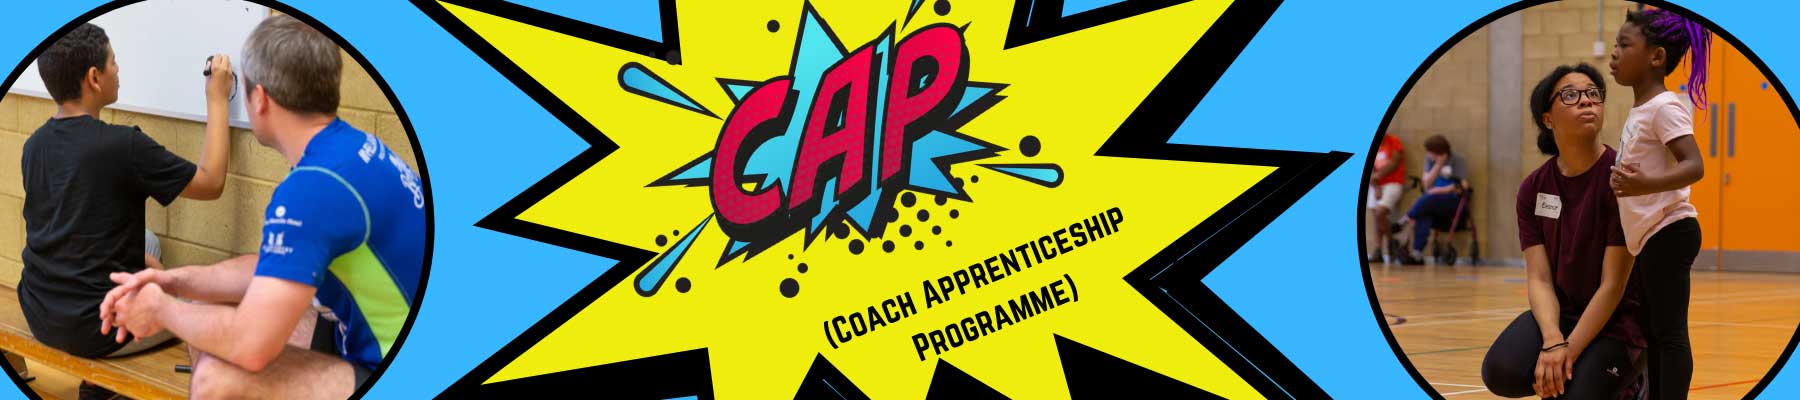 Coach Apprenticeship Programme